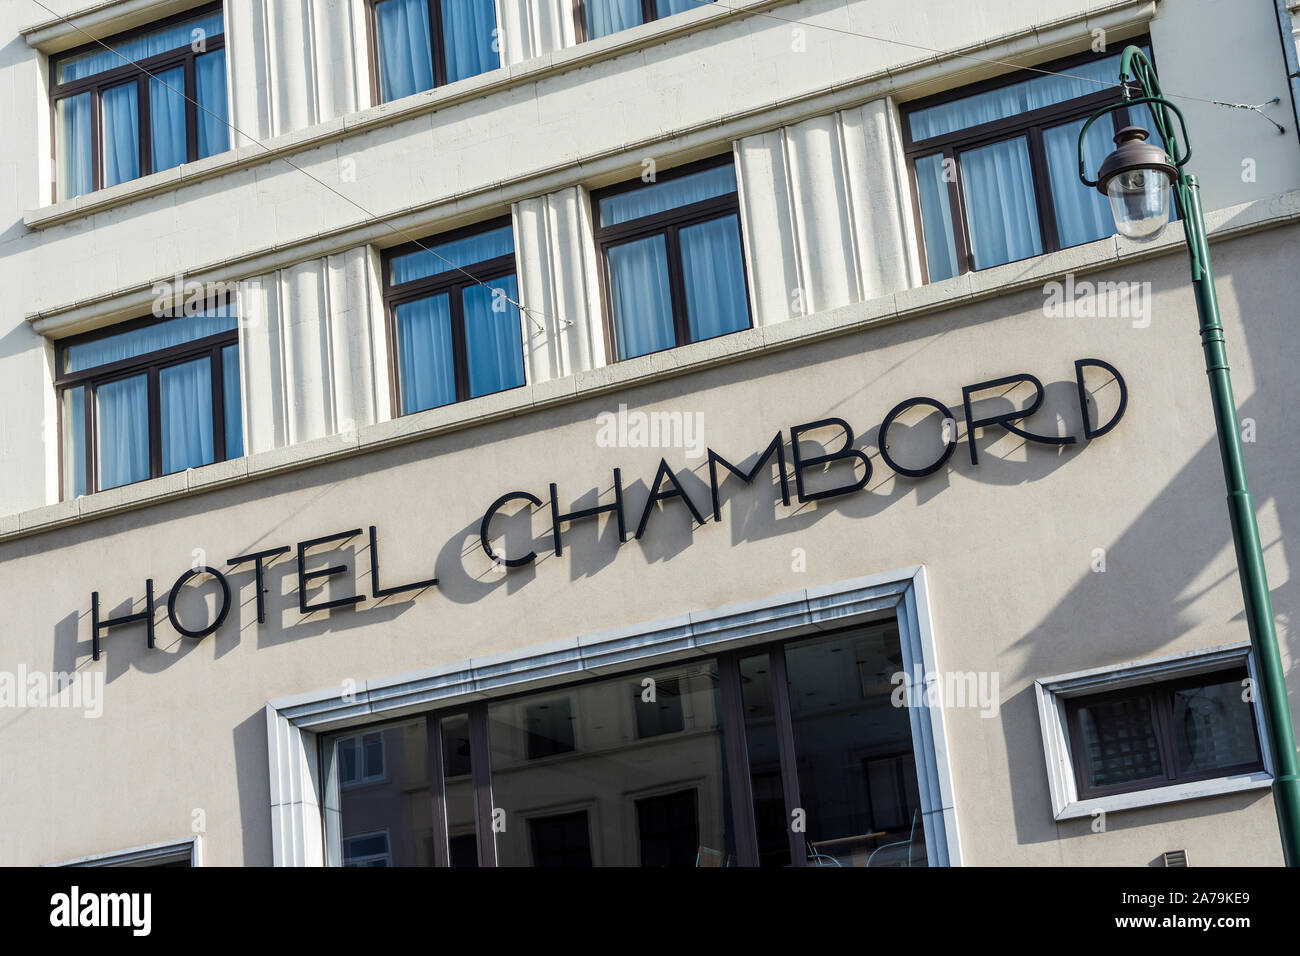 Frontage of Hotel Chambord, Rue de Namur, Ixelles, Brussels, Belgium. Stock Photo